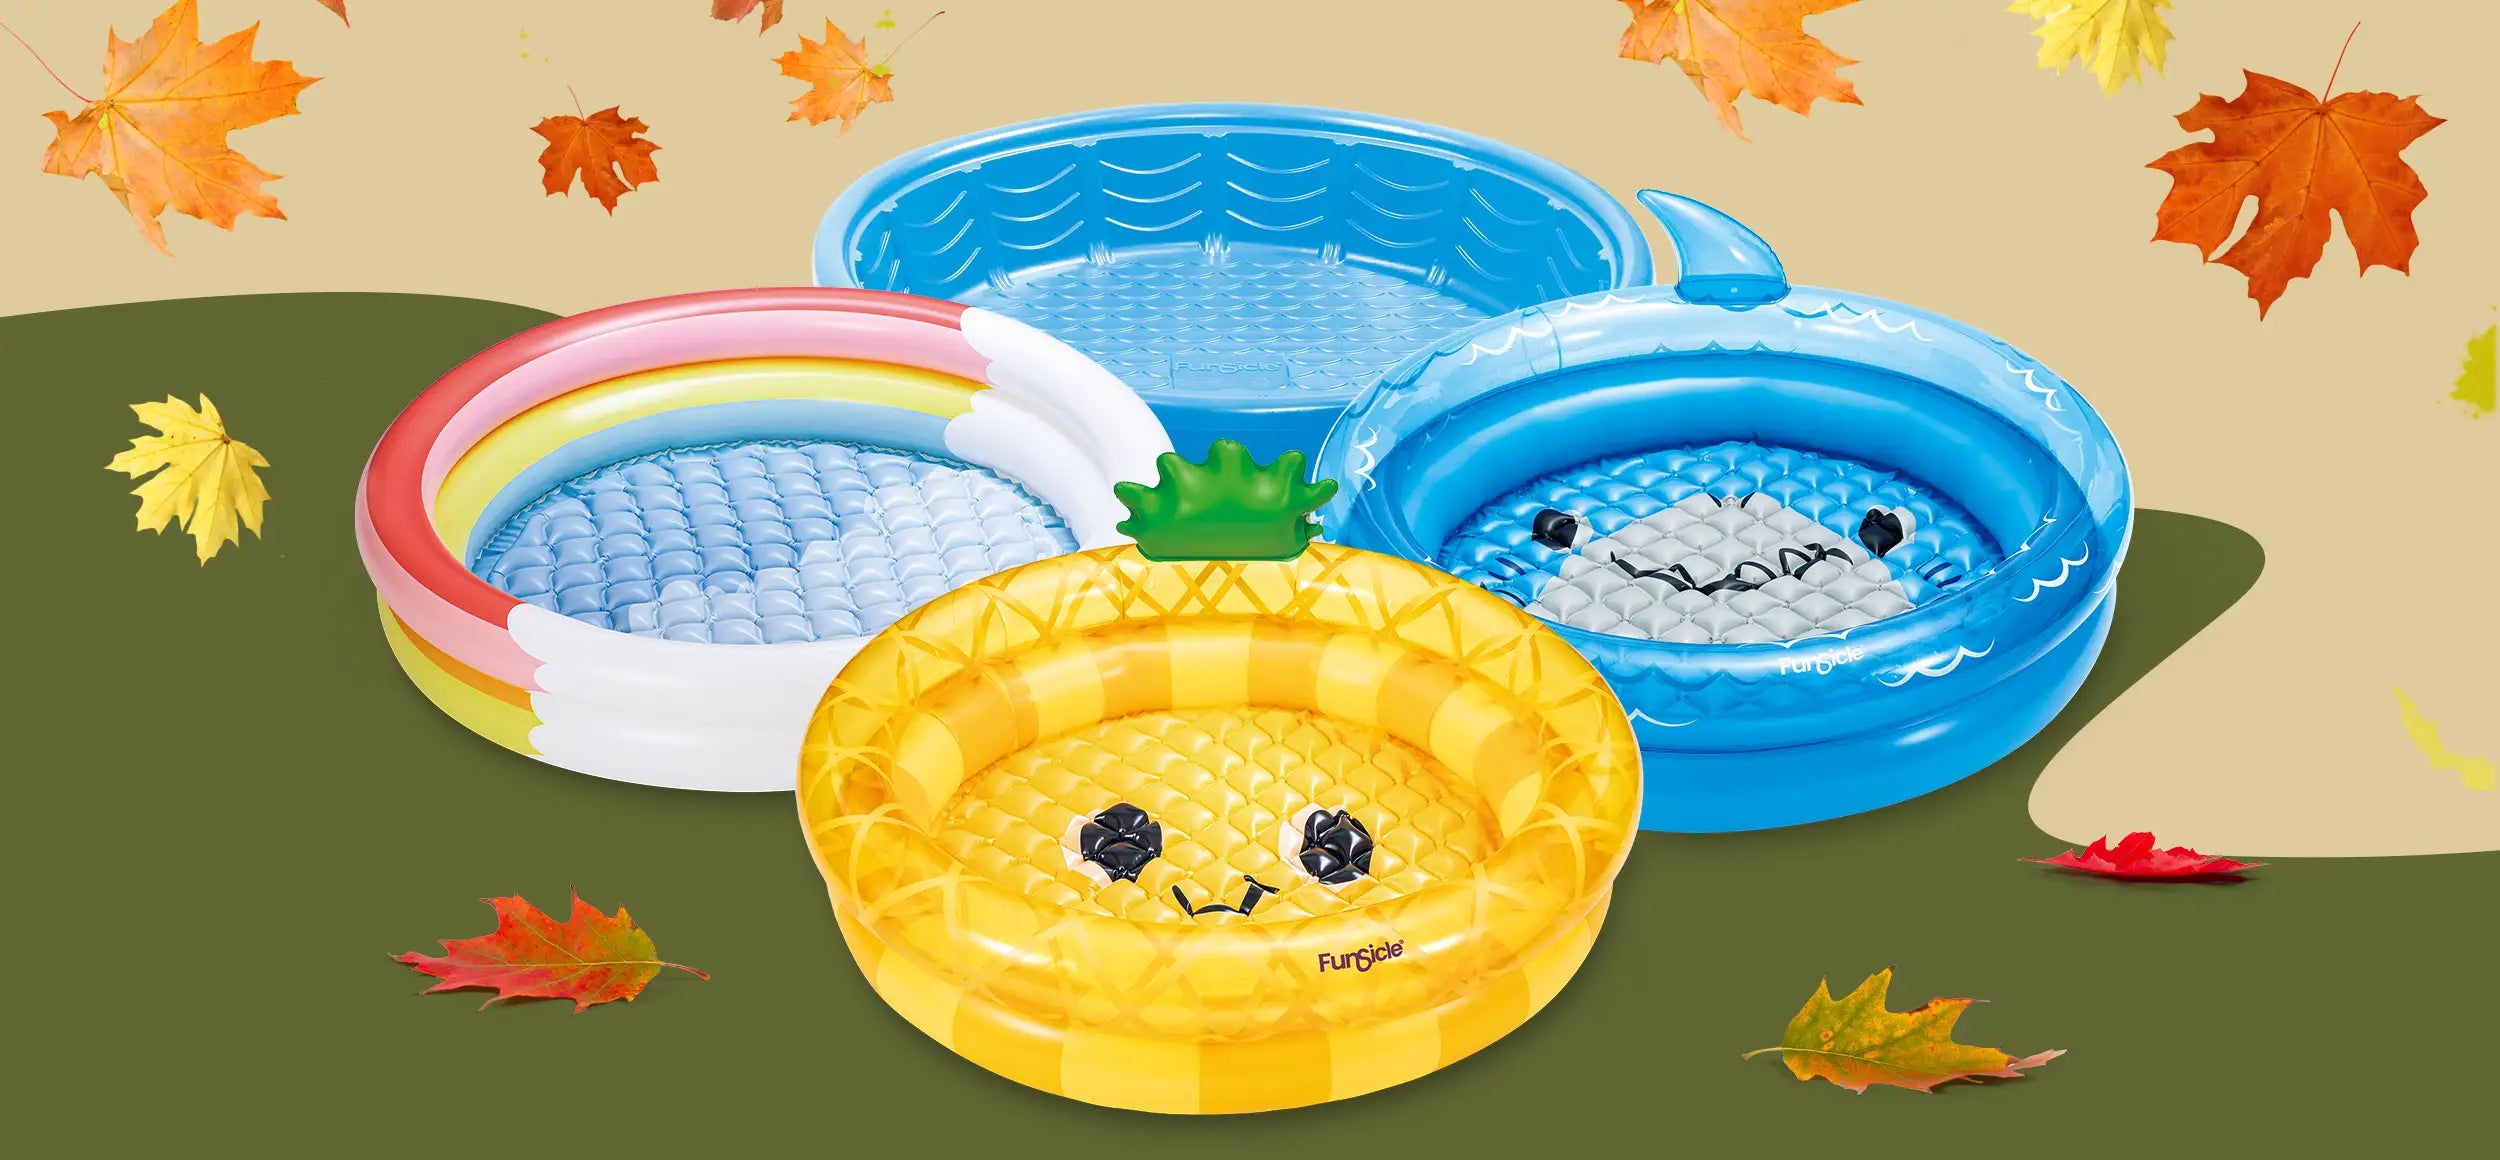 Funsicle Pineapple Ring Kids Pool, Shark FunRing Pool and Rainbow Heaven Kid Pool in fall season theme